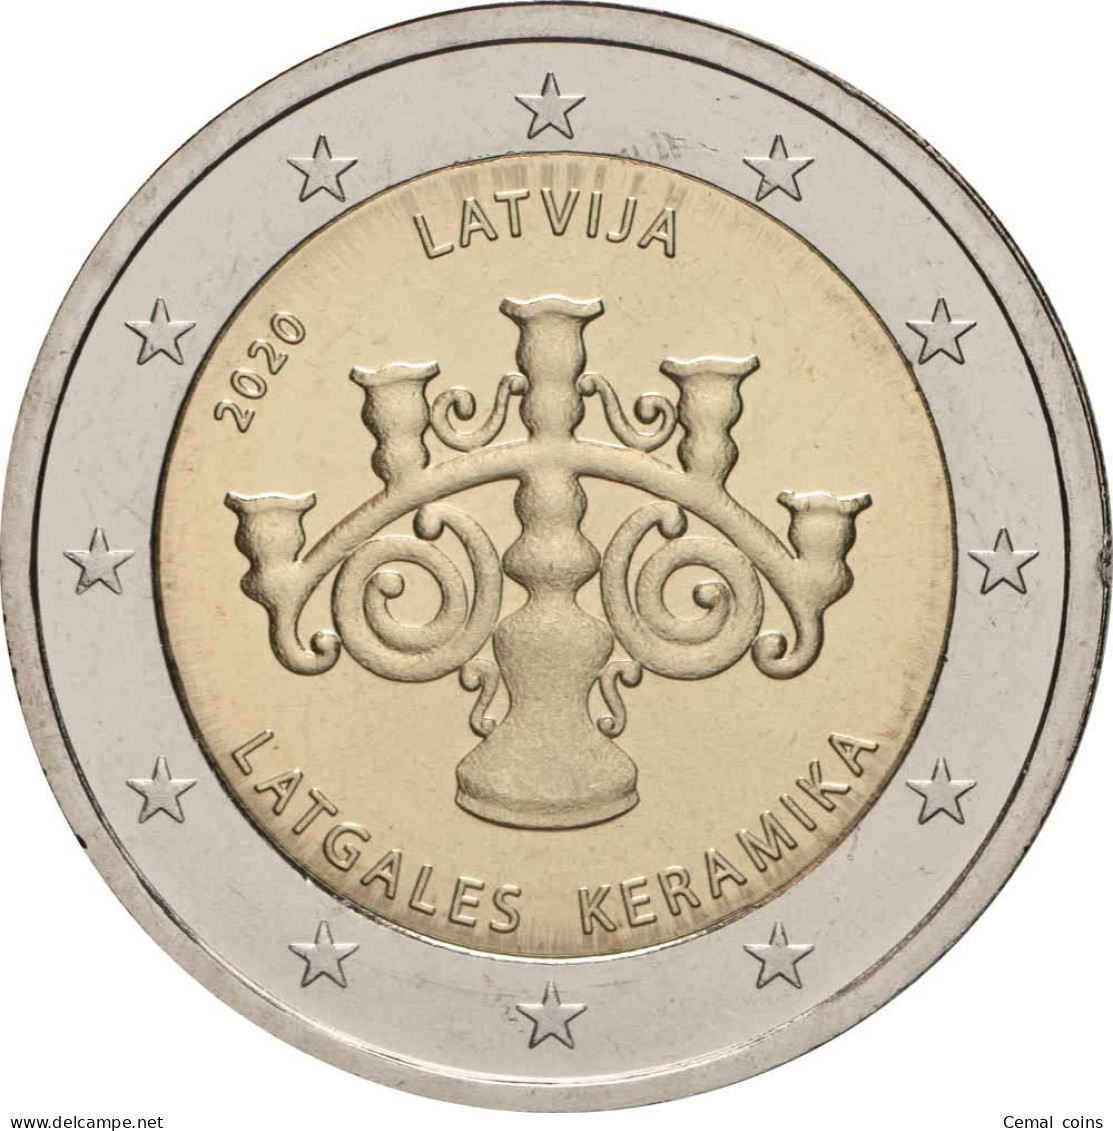 2 Euro 2020 Latvian Commemorative Coin - Latgalian Ceramics. - Lettonie